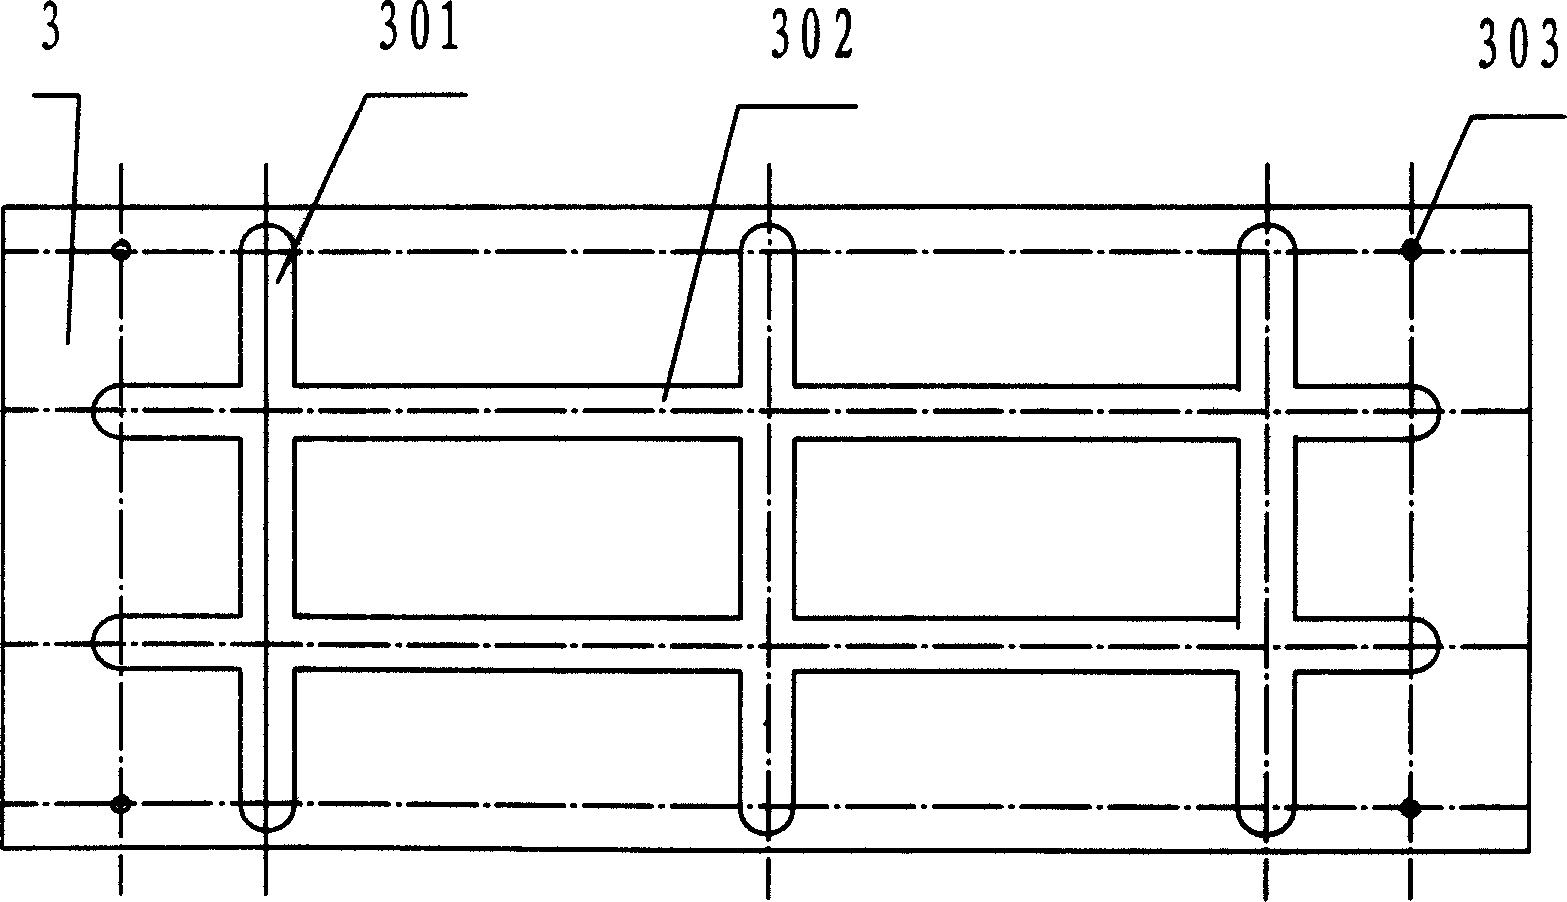 Large caliber standard plate precison regulation stand